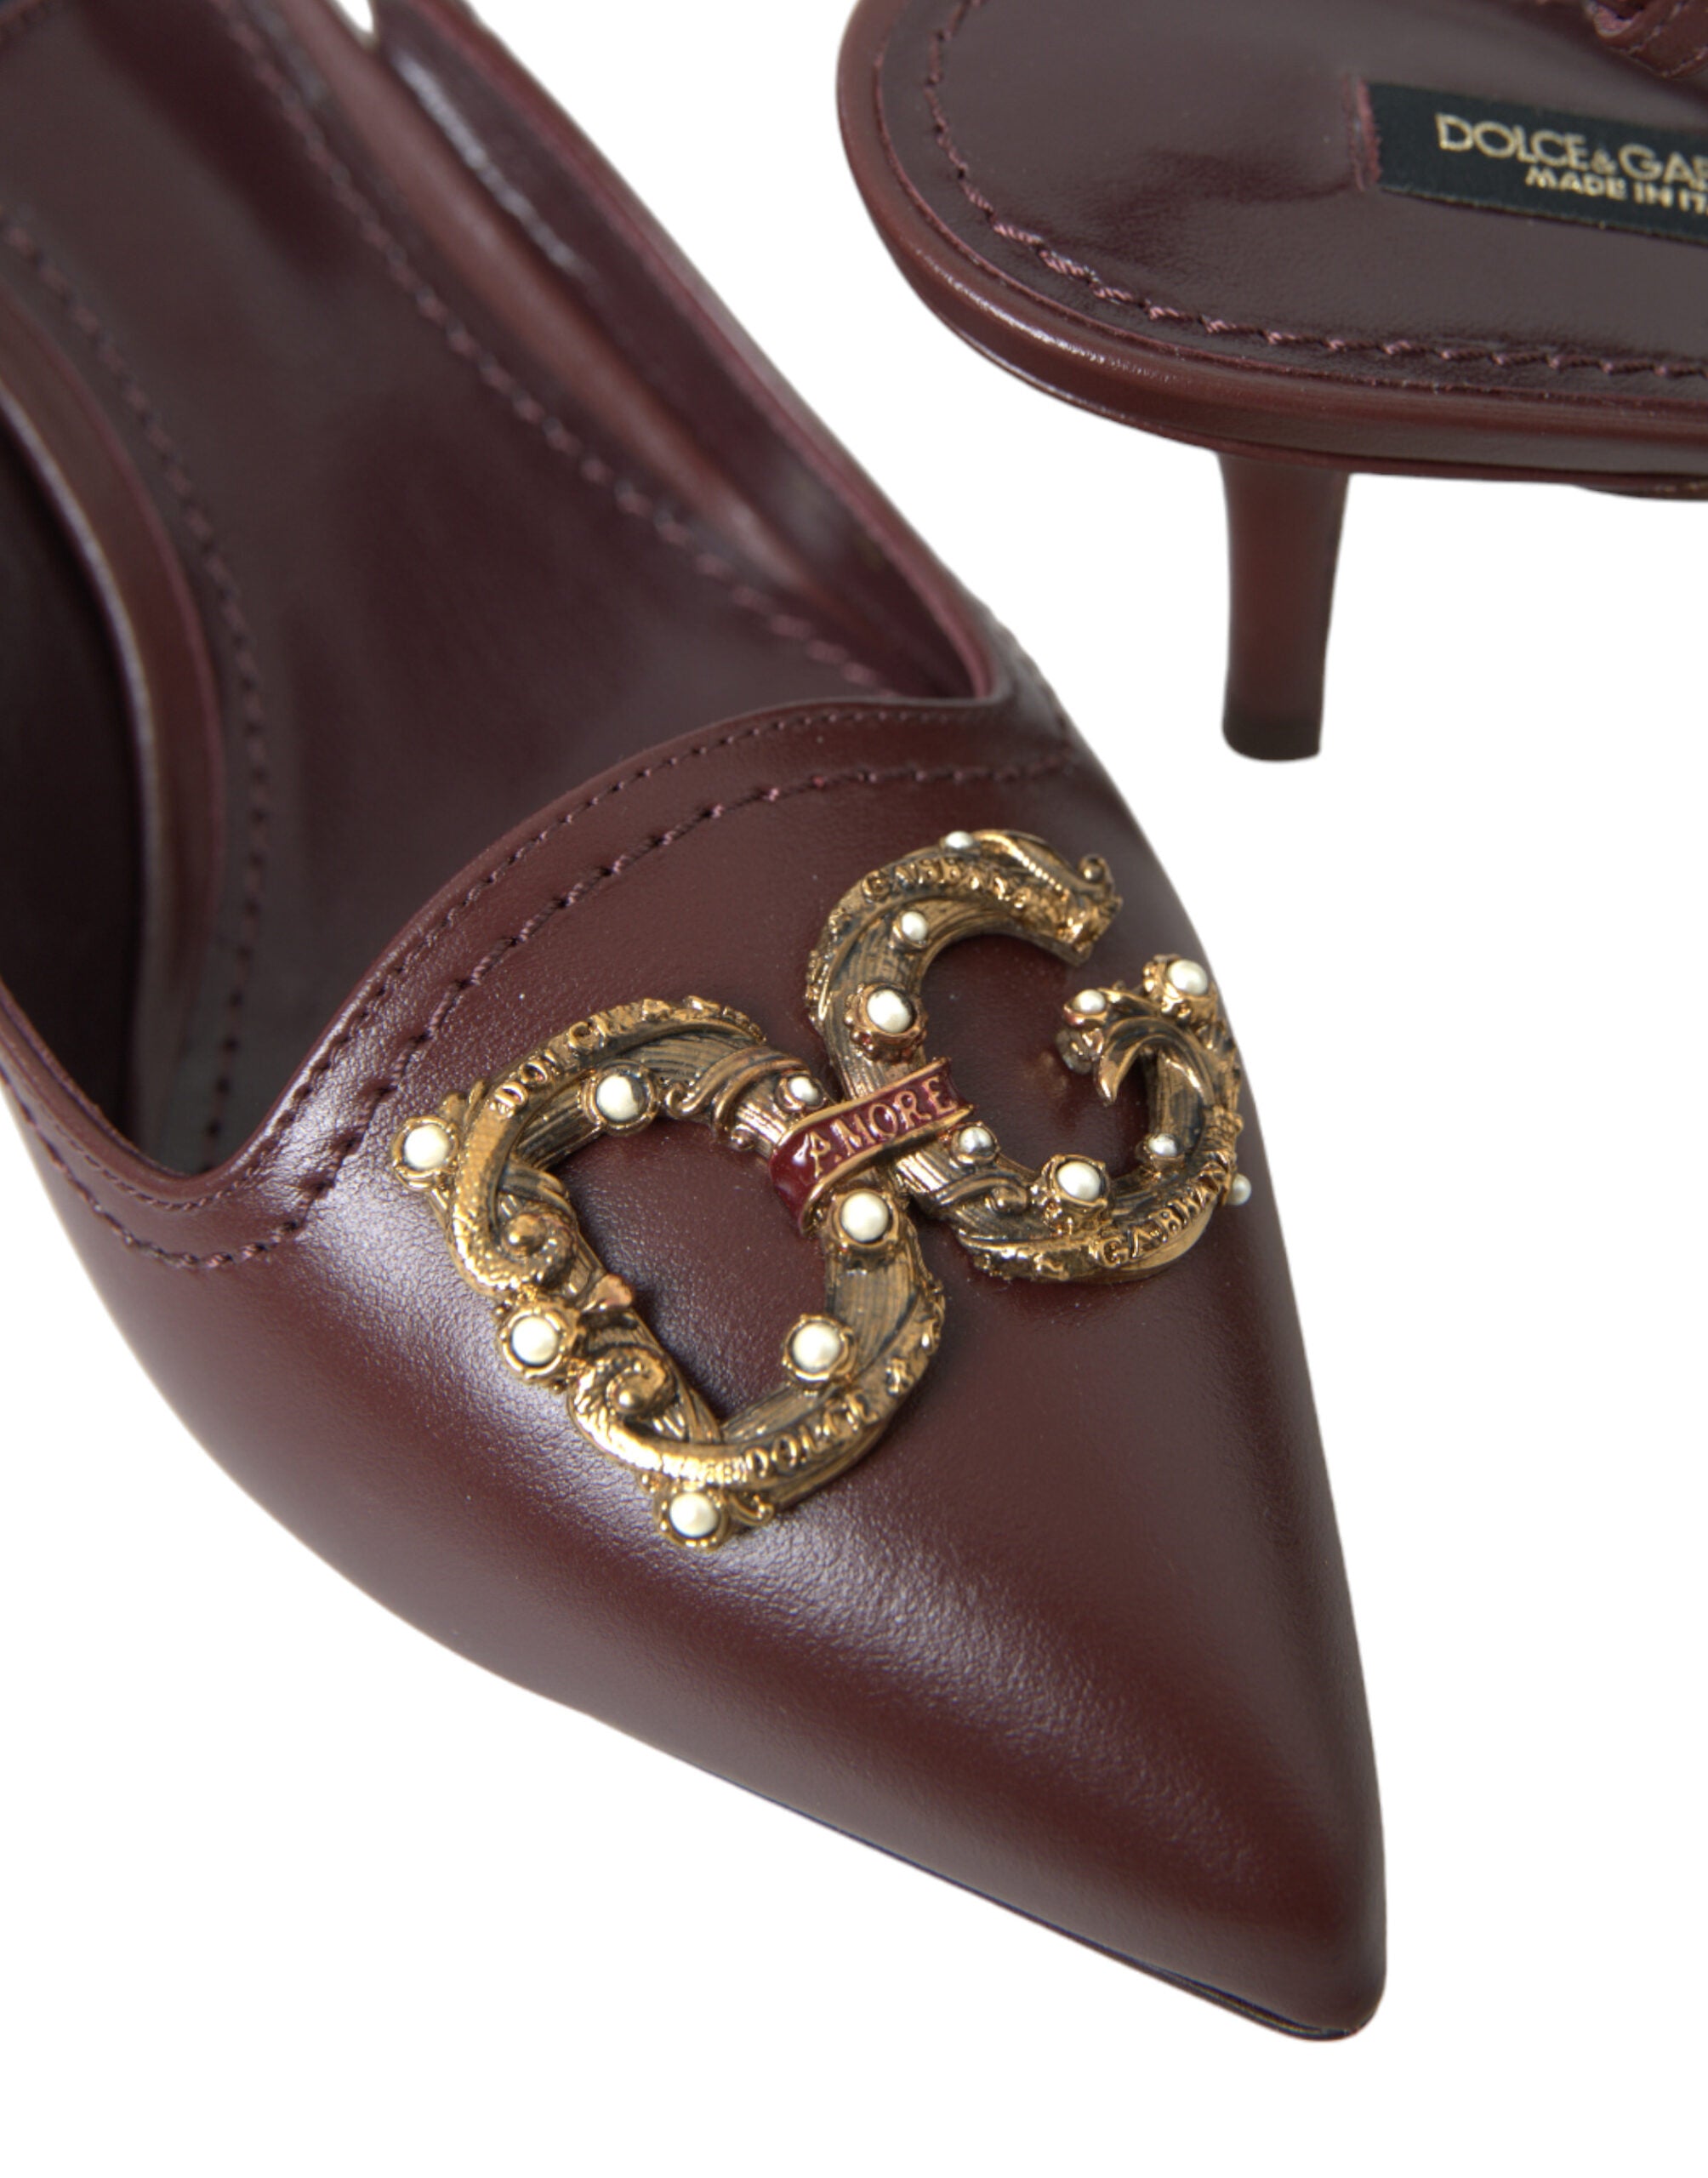 Dolce & Gabbana Elegant Leather Slingback Pumps - Chic Brown Hue